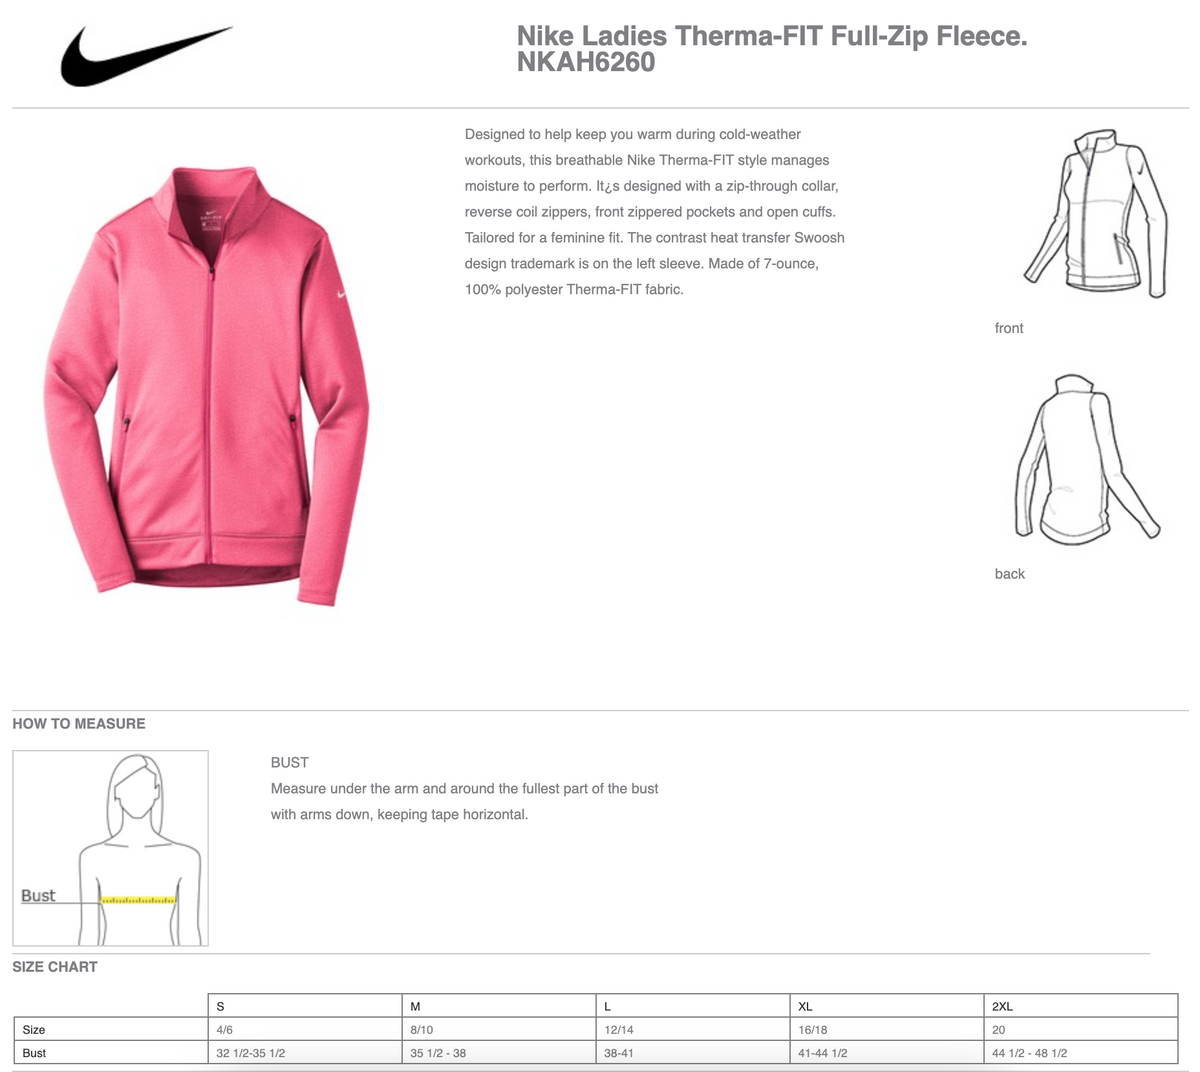 Samford University Lacrosse Club Ladies Nike Thema-Fit Full Zip Fleece